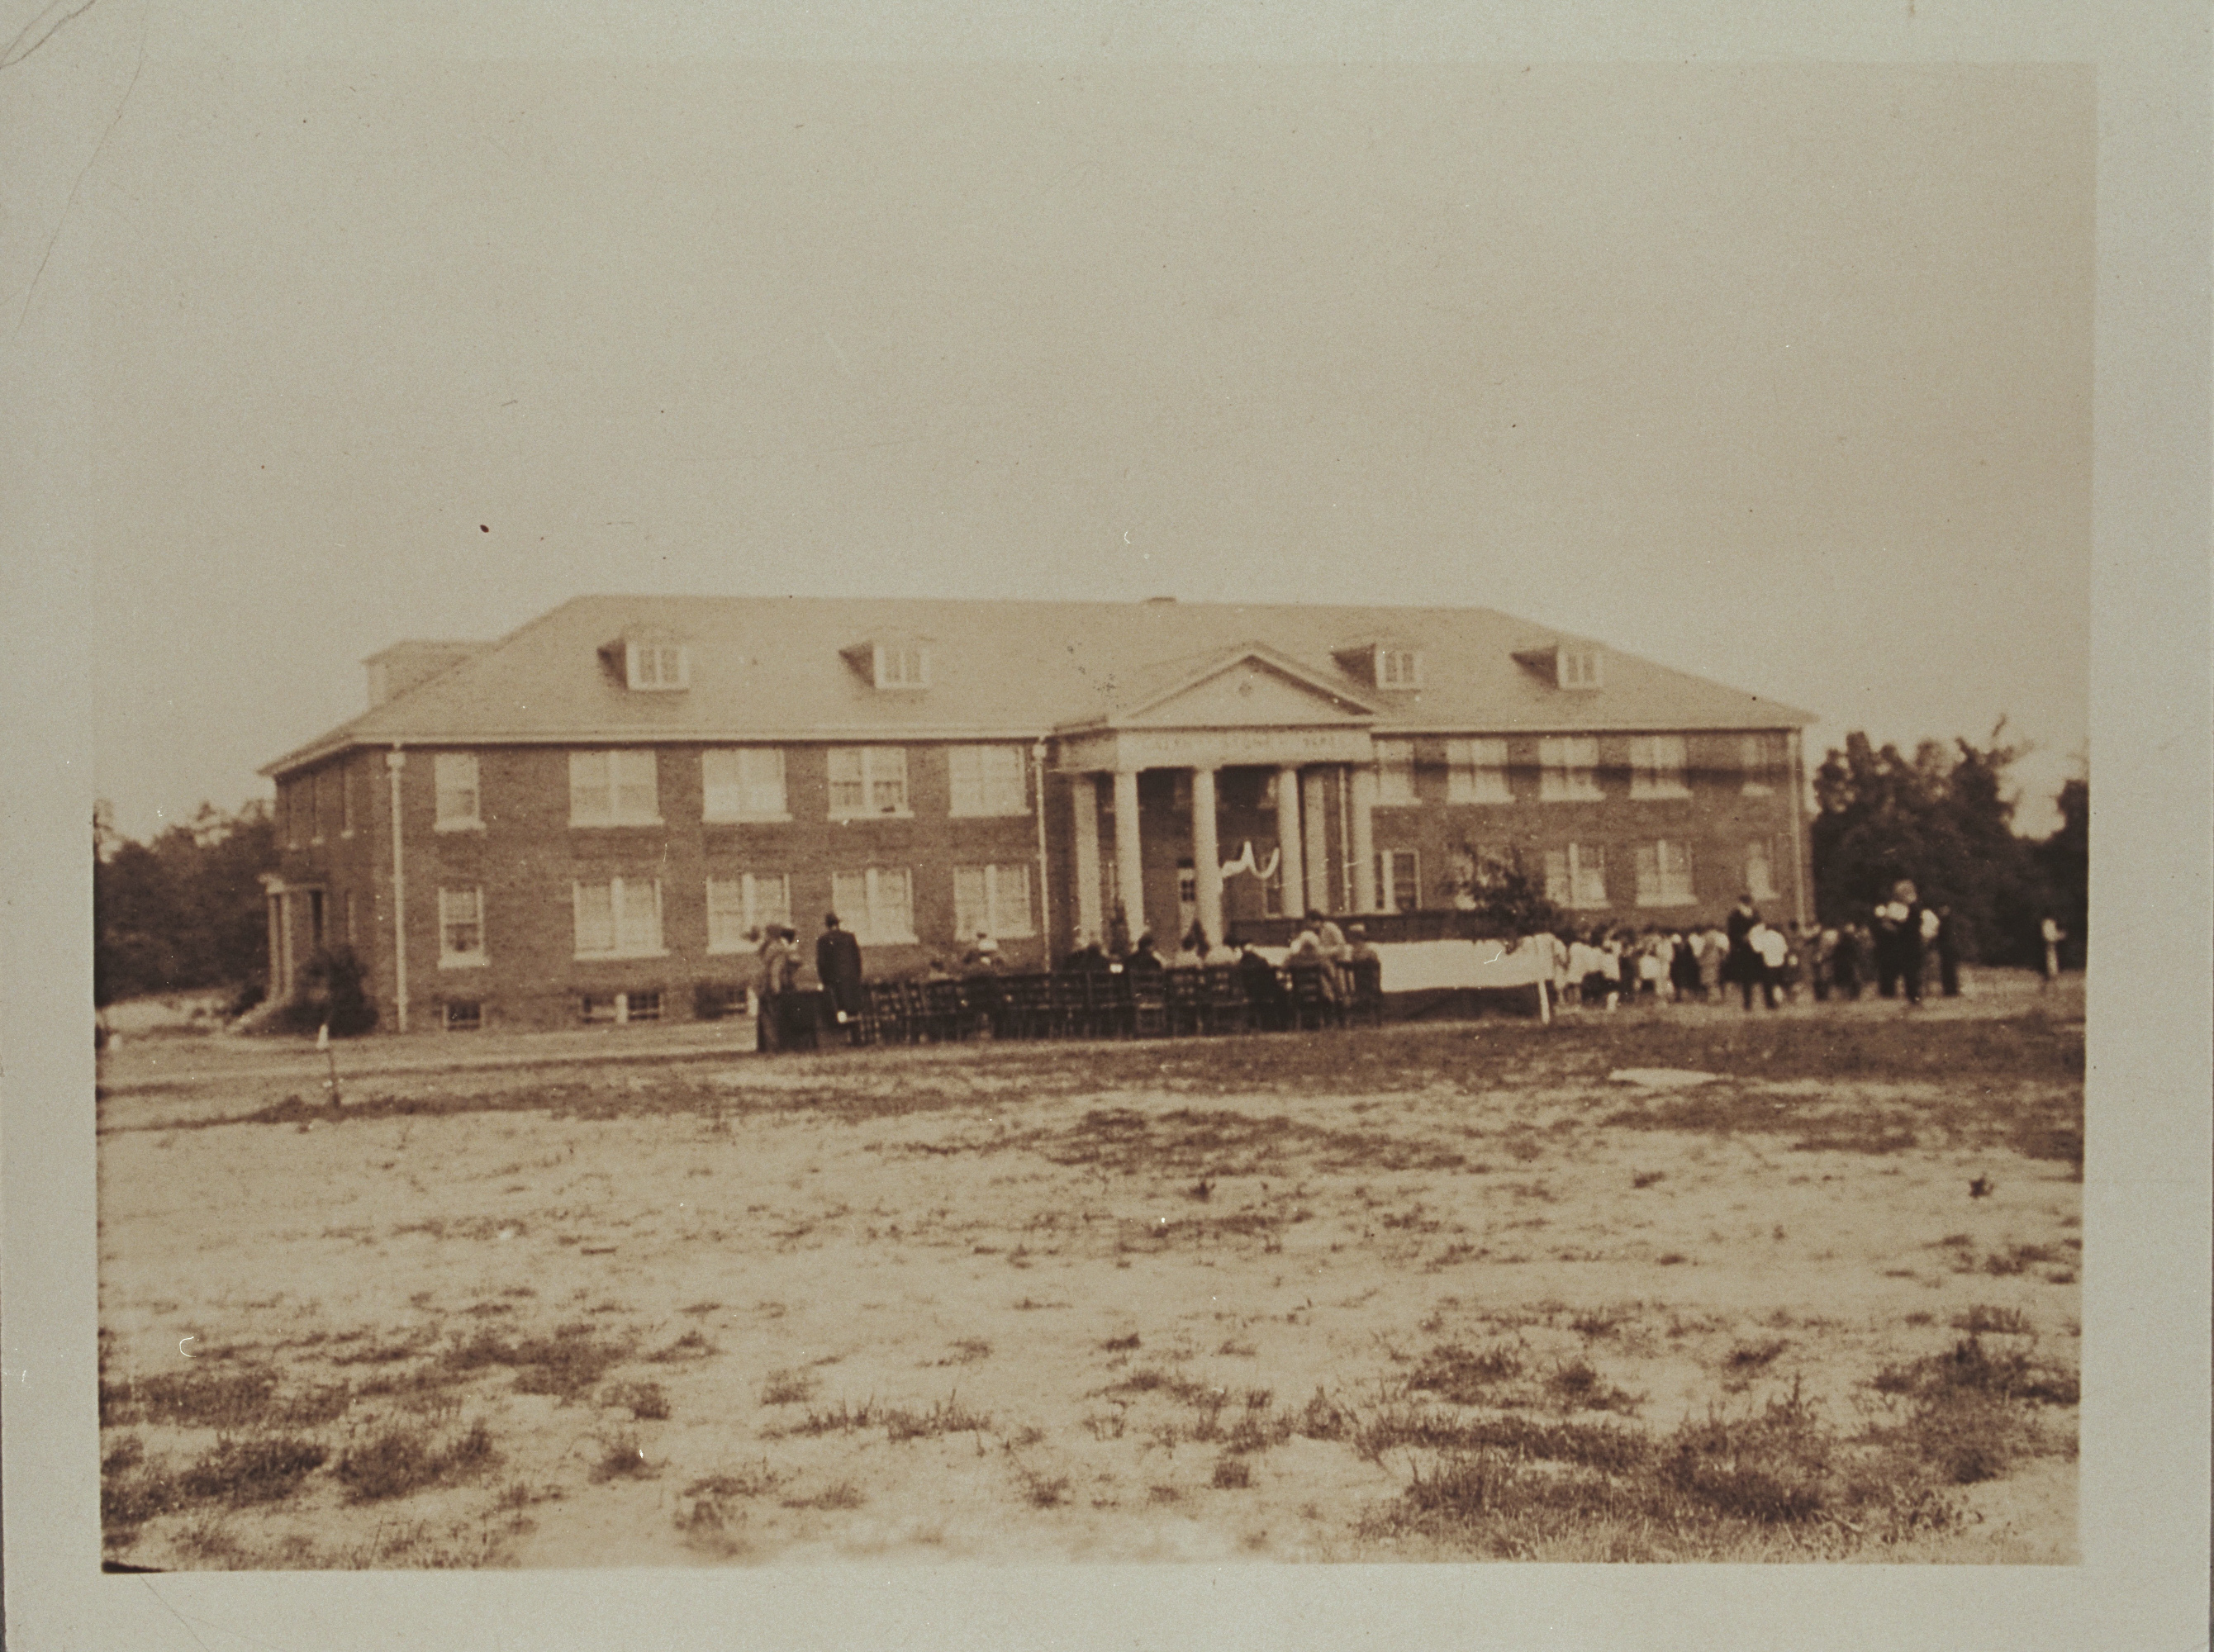 Stone Hall at Palmer Memorial Institute, ca. 1915-1920.